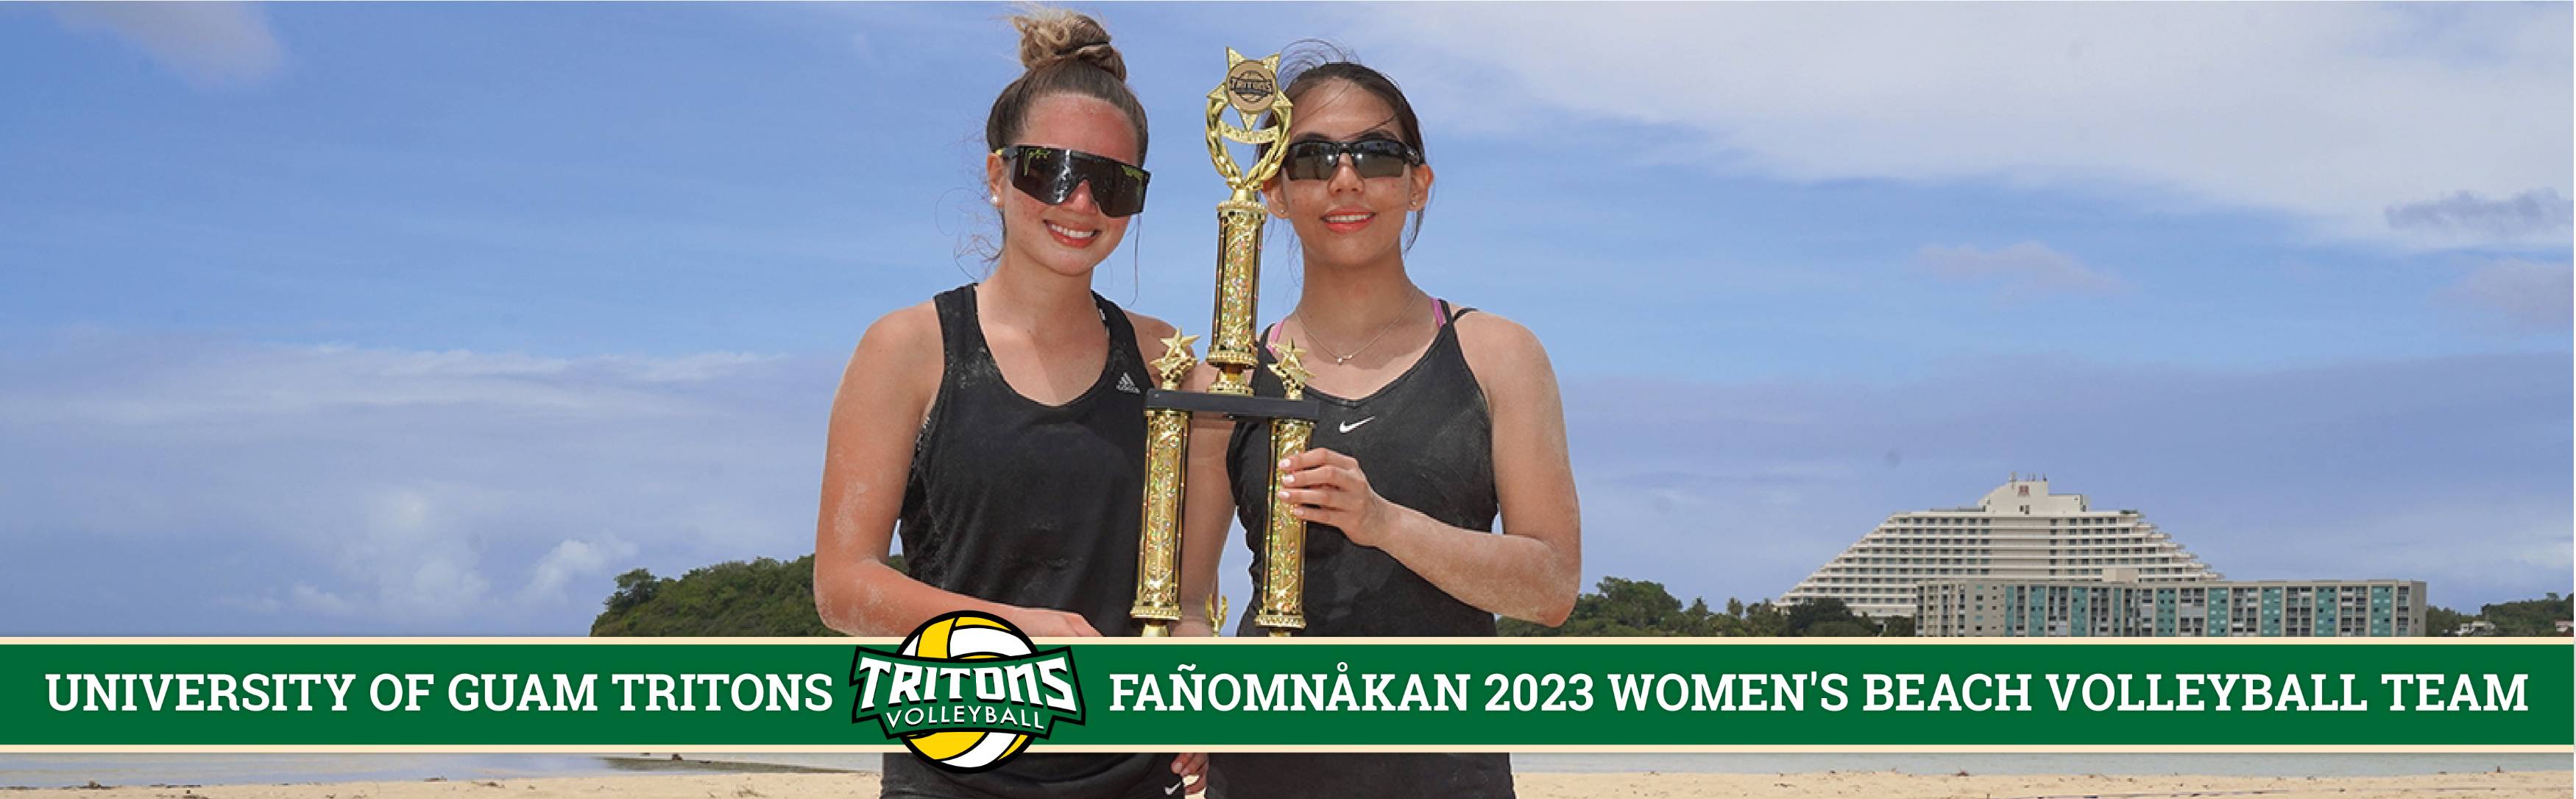 Triton Women's Beach Volleyball Team Fanomnakan 2023